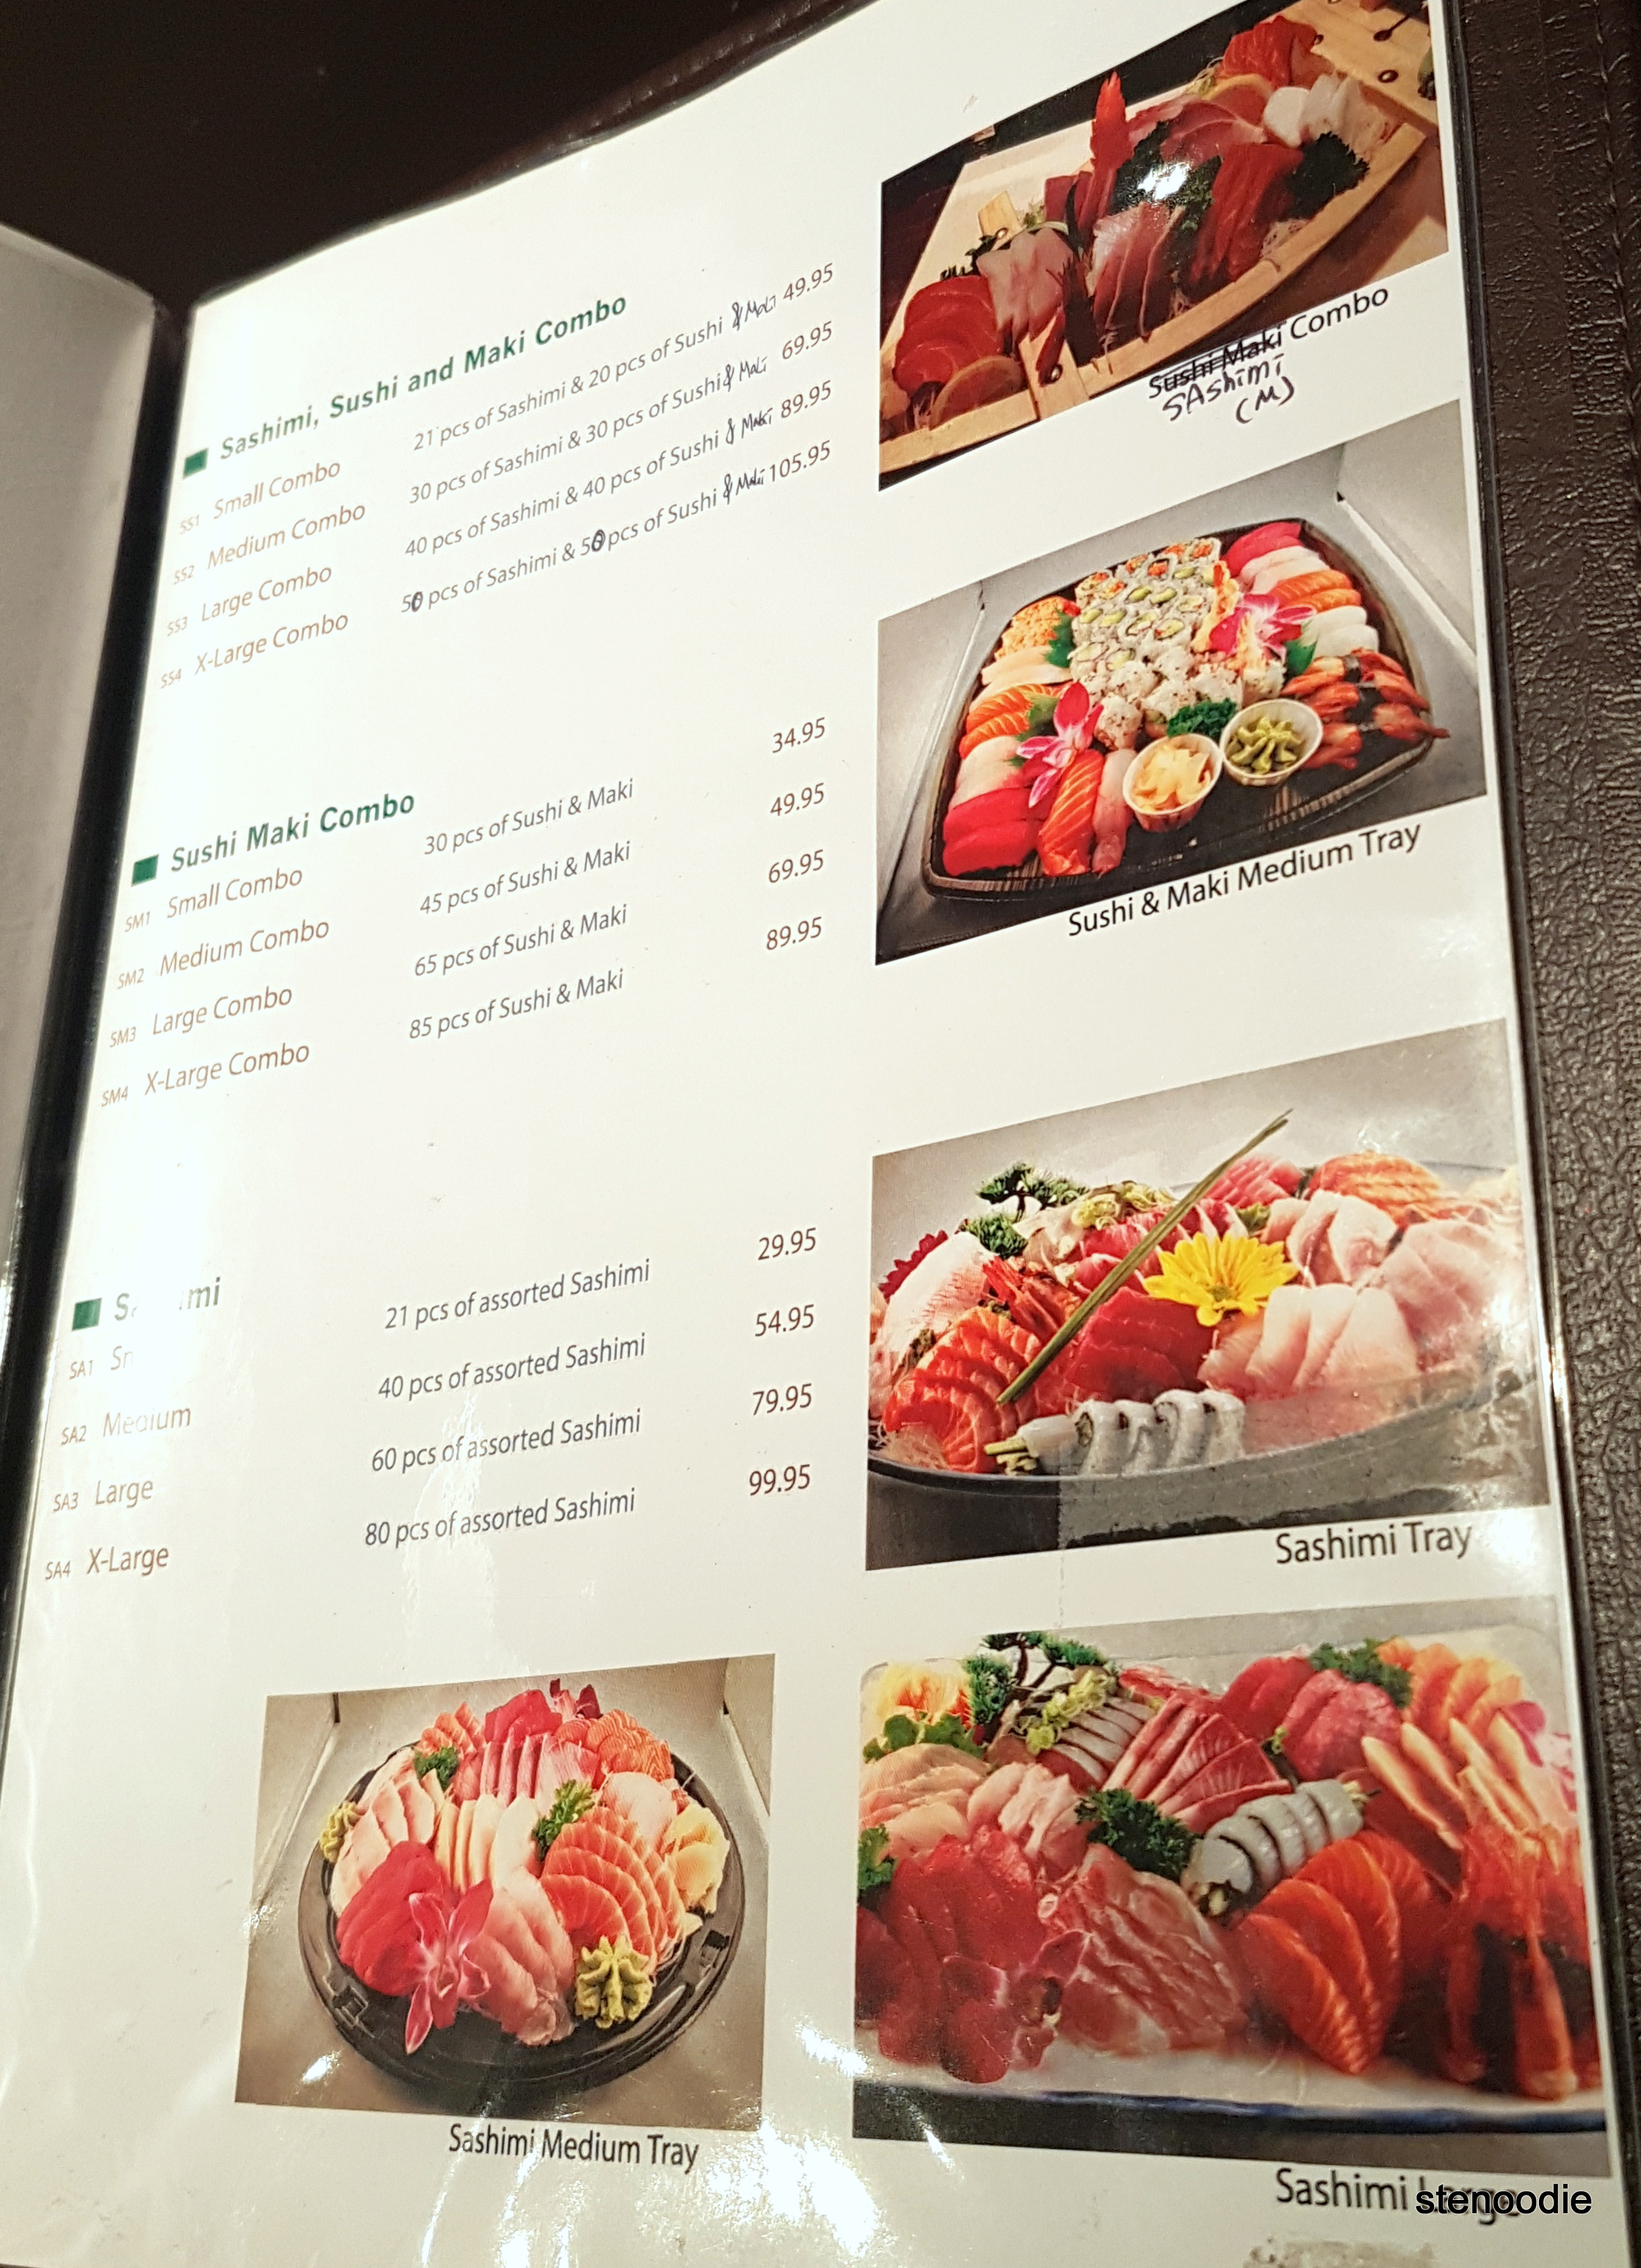  Hamaru Sushi menu and prices